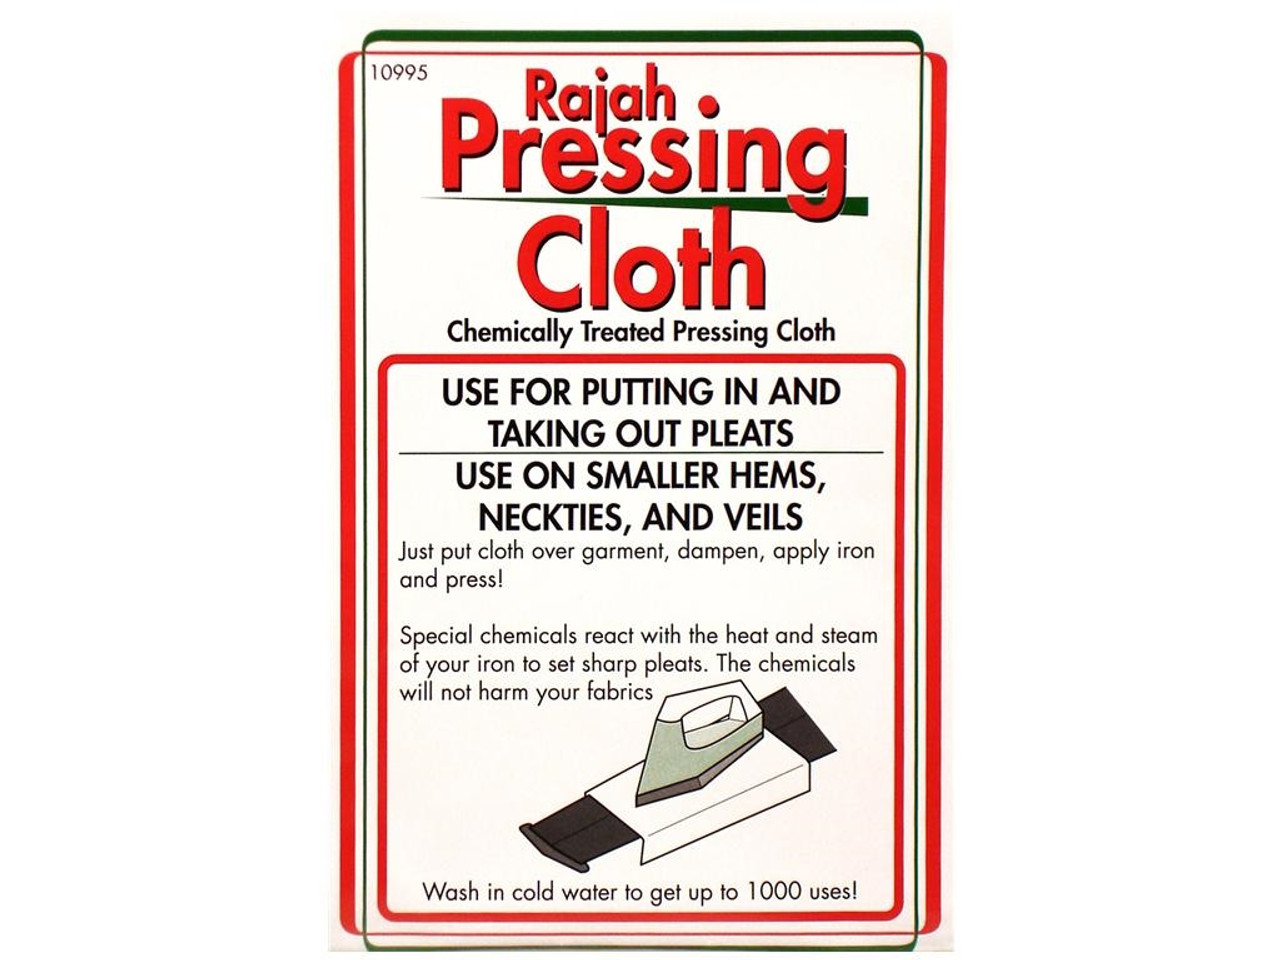 Rajah Pressing Cloth by Sullivans